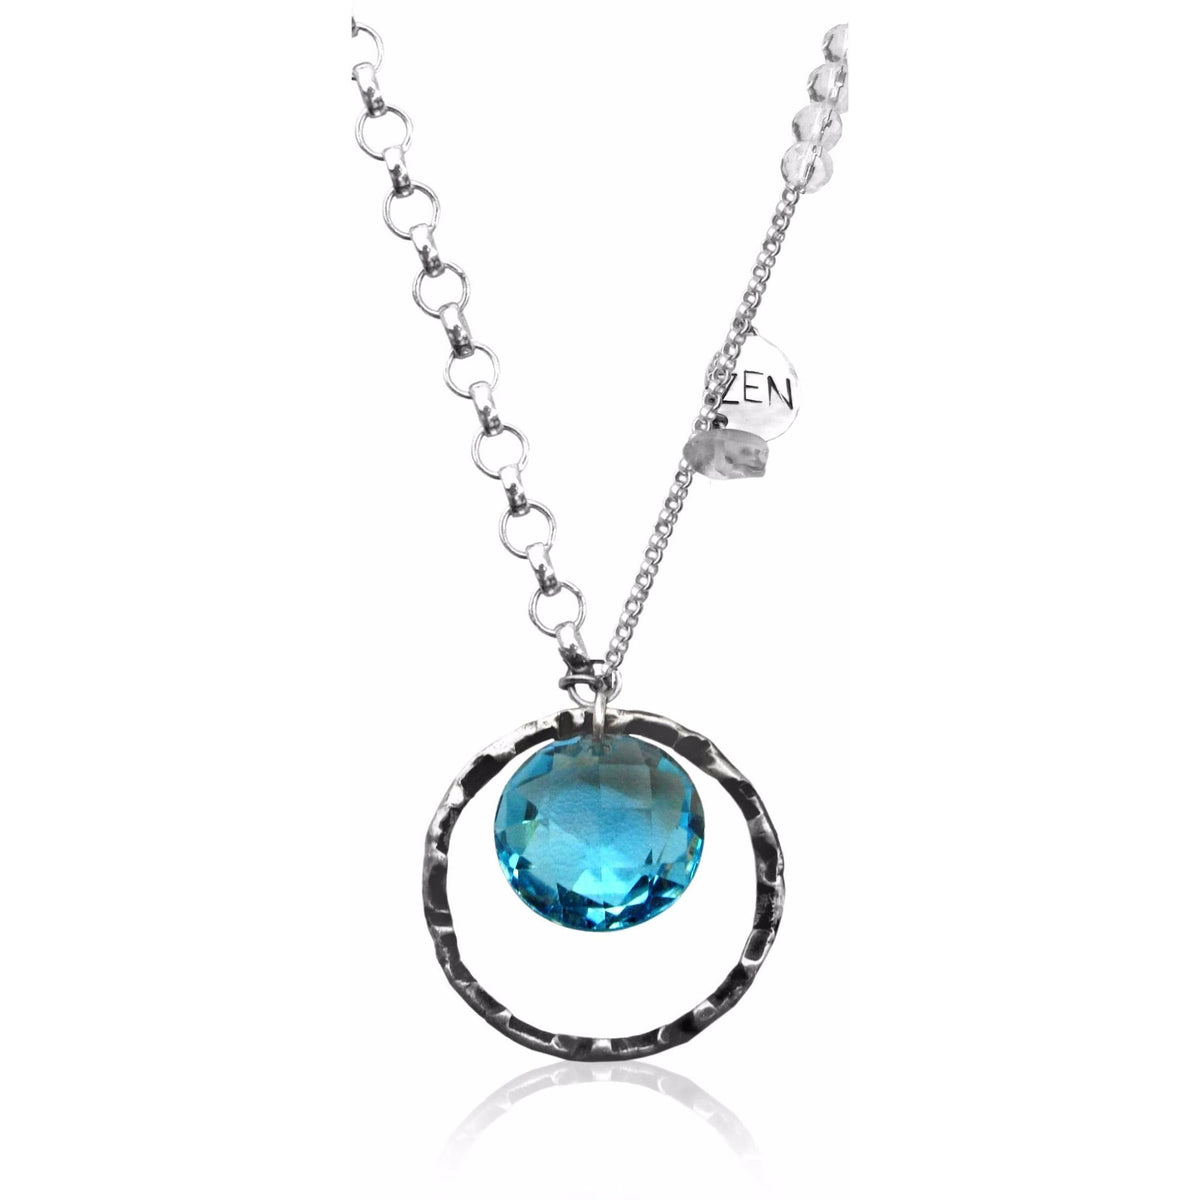 Sterling Silver Zen Necklace with Aquamarine Swarowski Crystal 35 Inch.